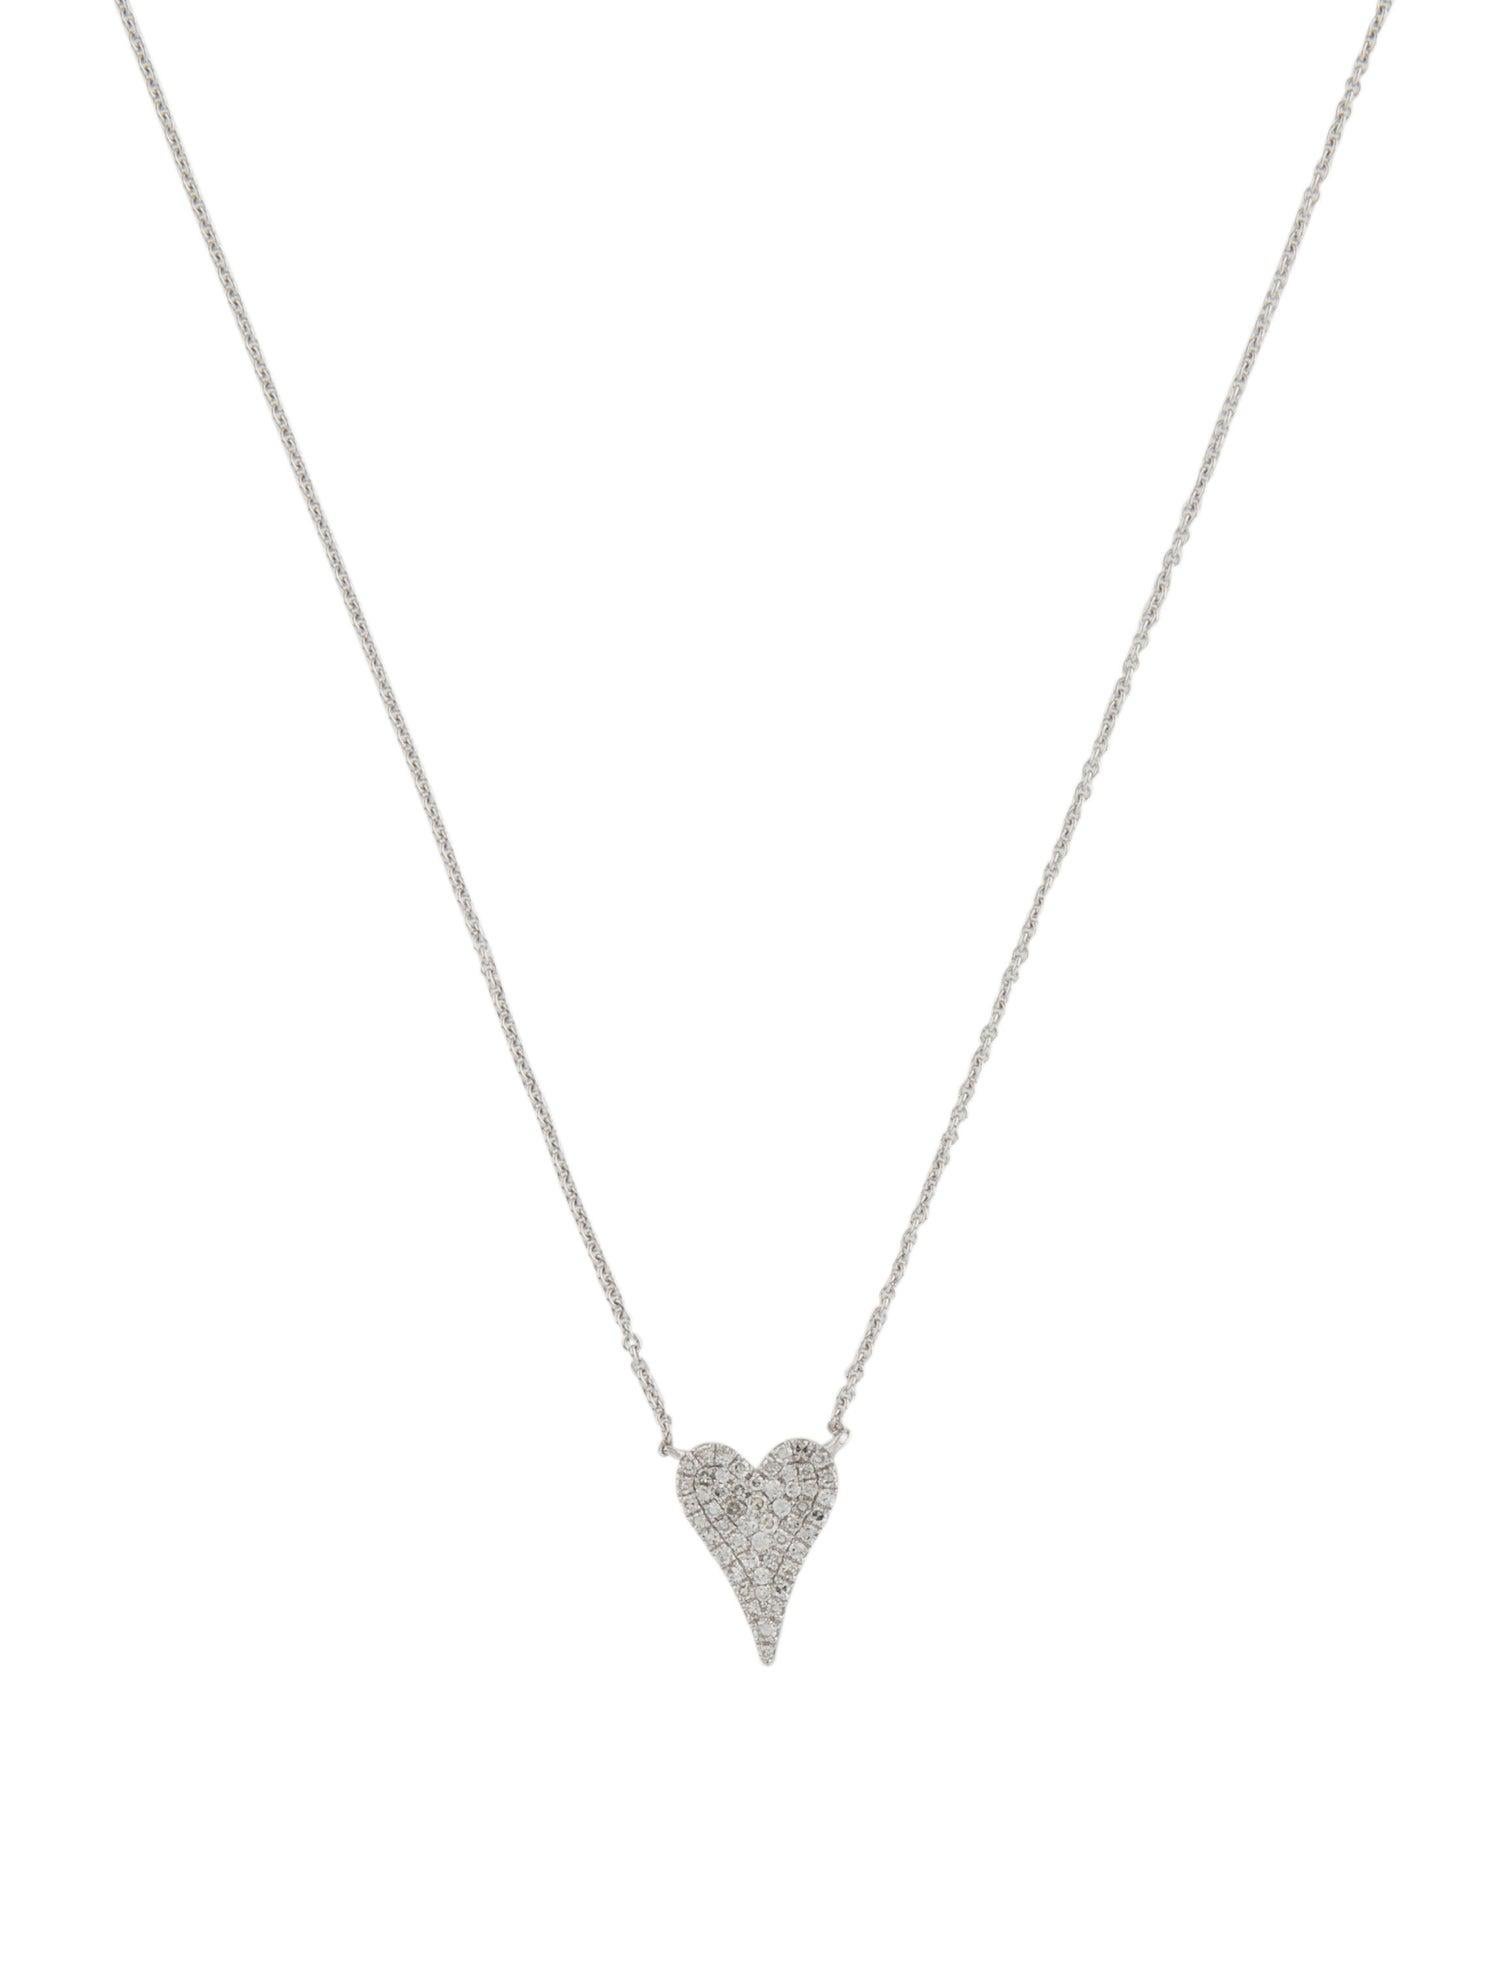 14 Karat White Gold 0.13 Carat Diamond Heart Paved Pendant Necklace For Sale 2